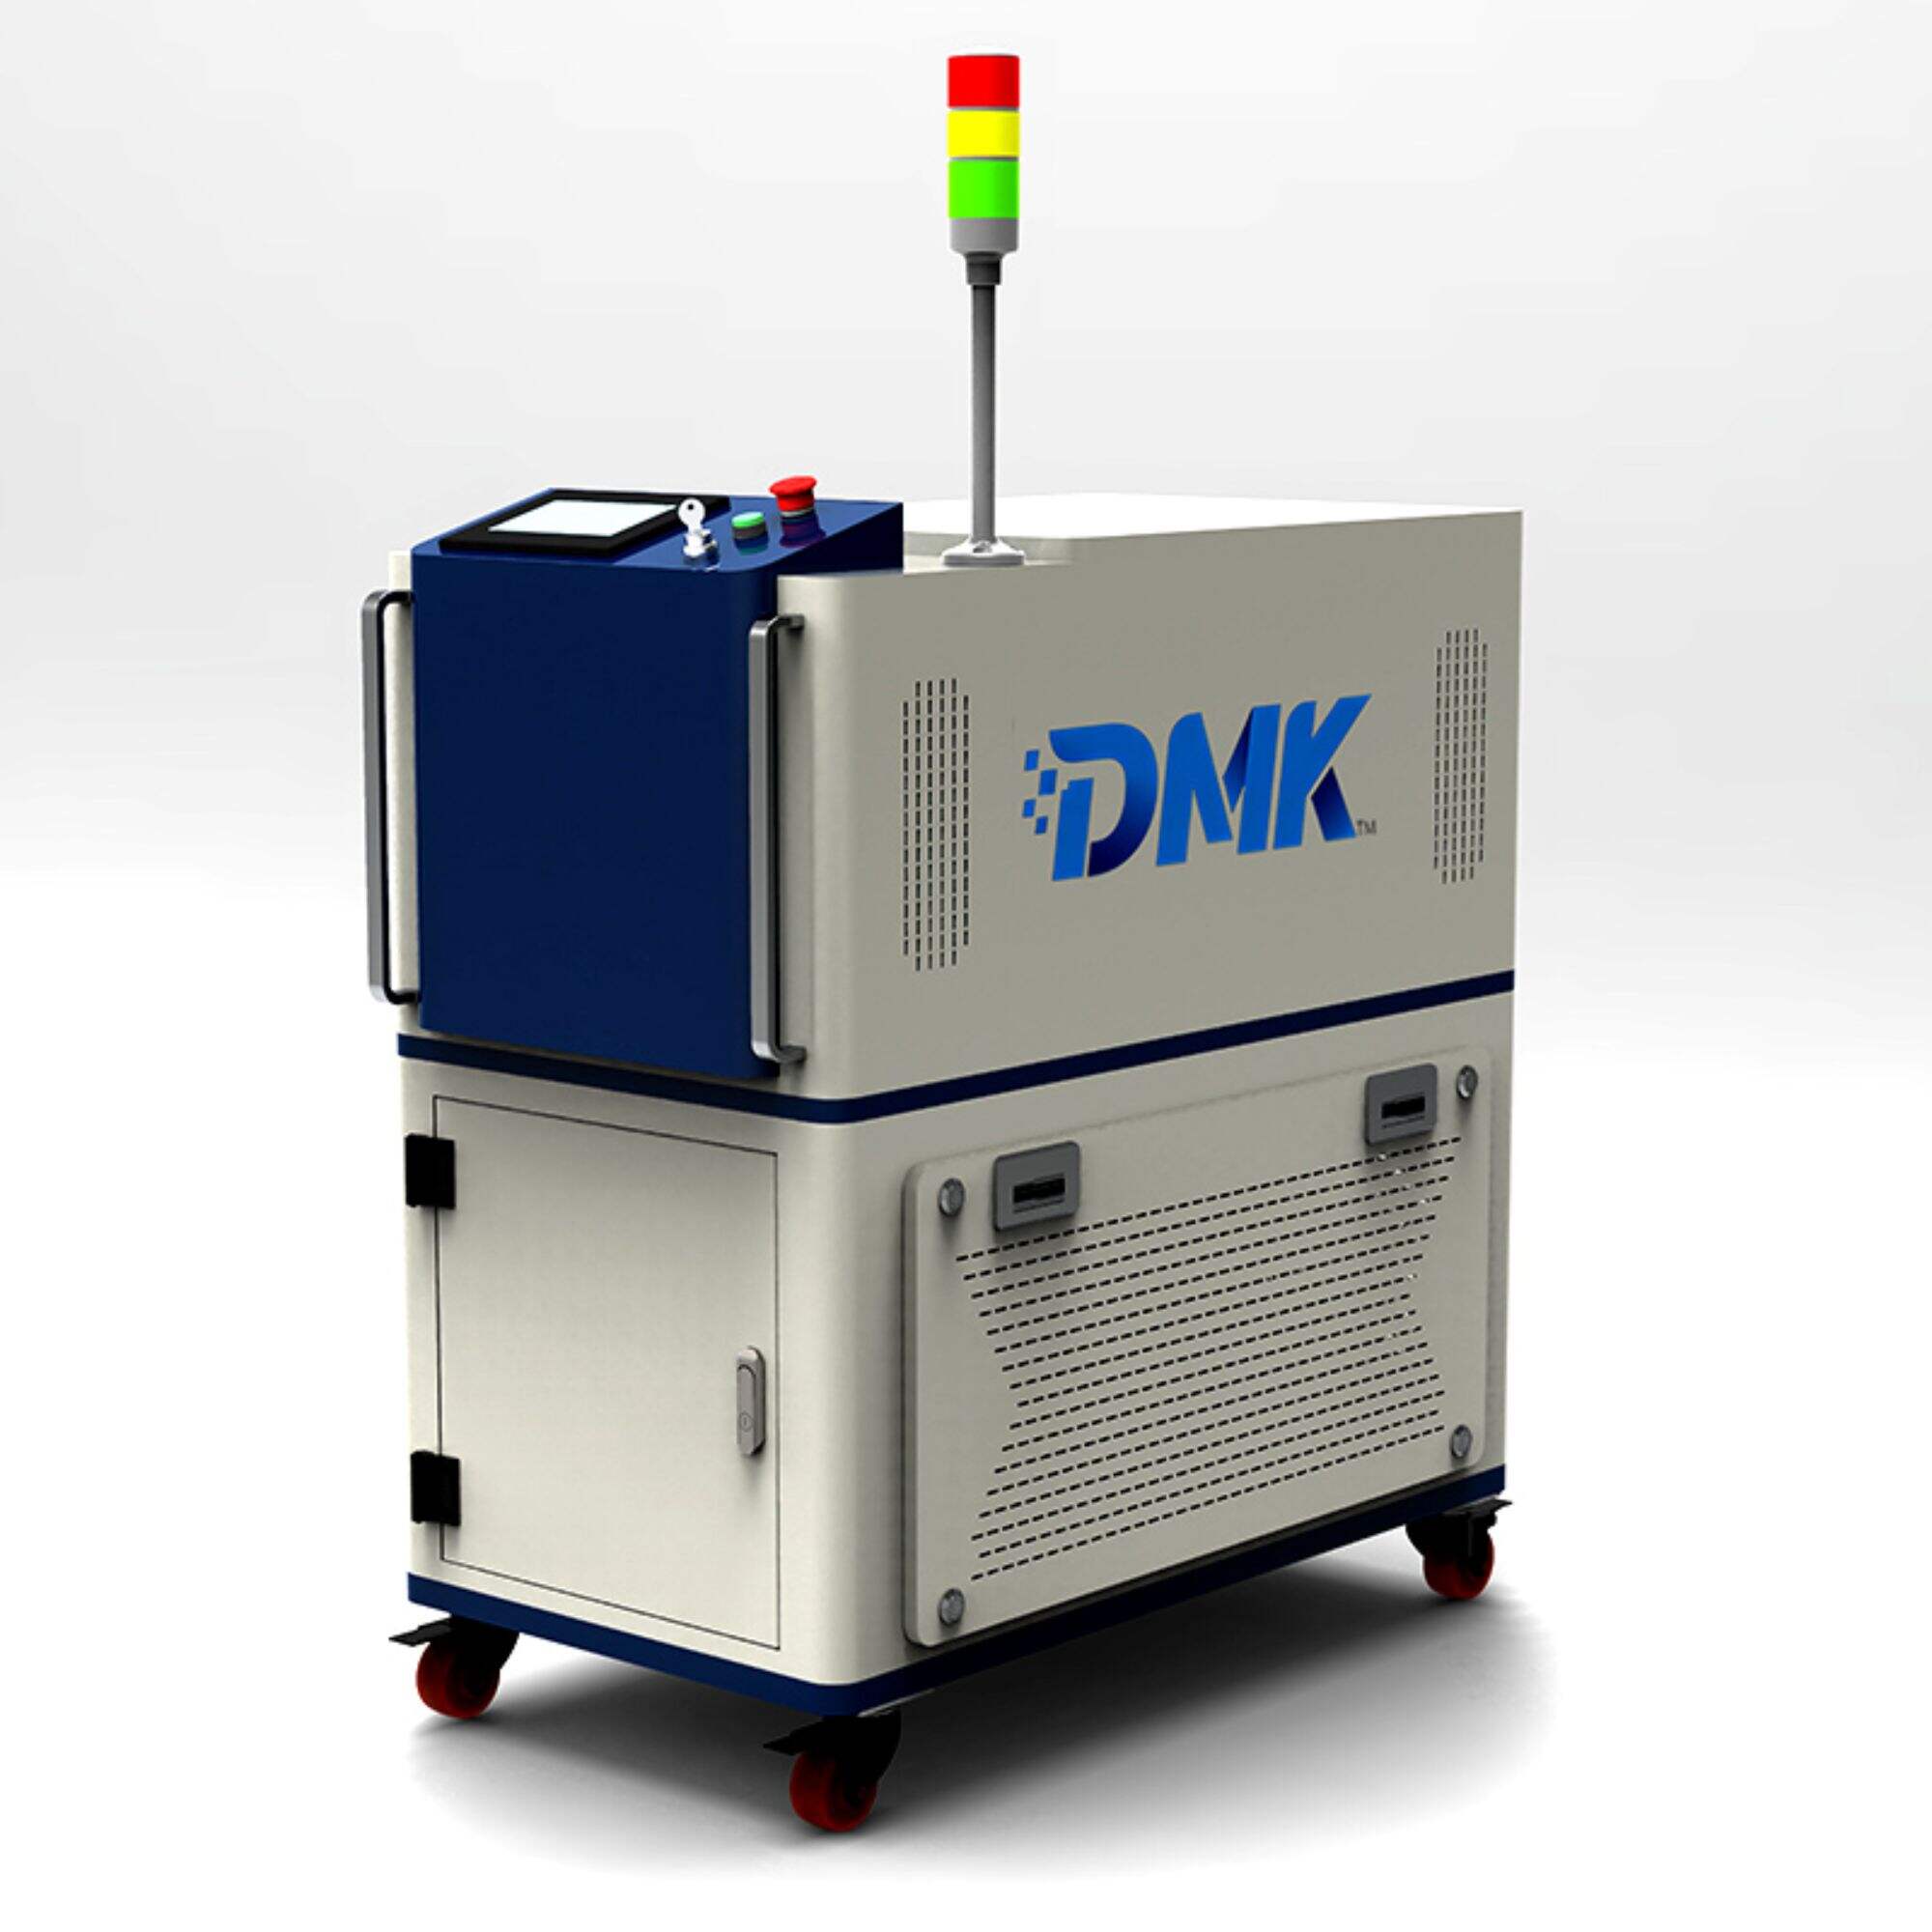 DMK 휴대용 3000W CW 레이저 텍스처링 클리닝 기계